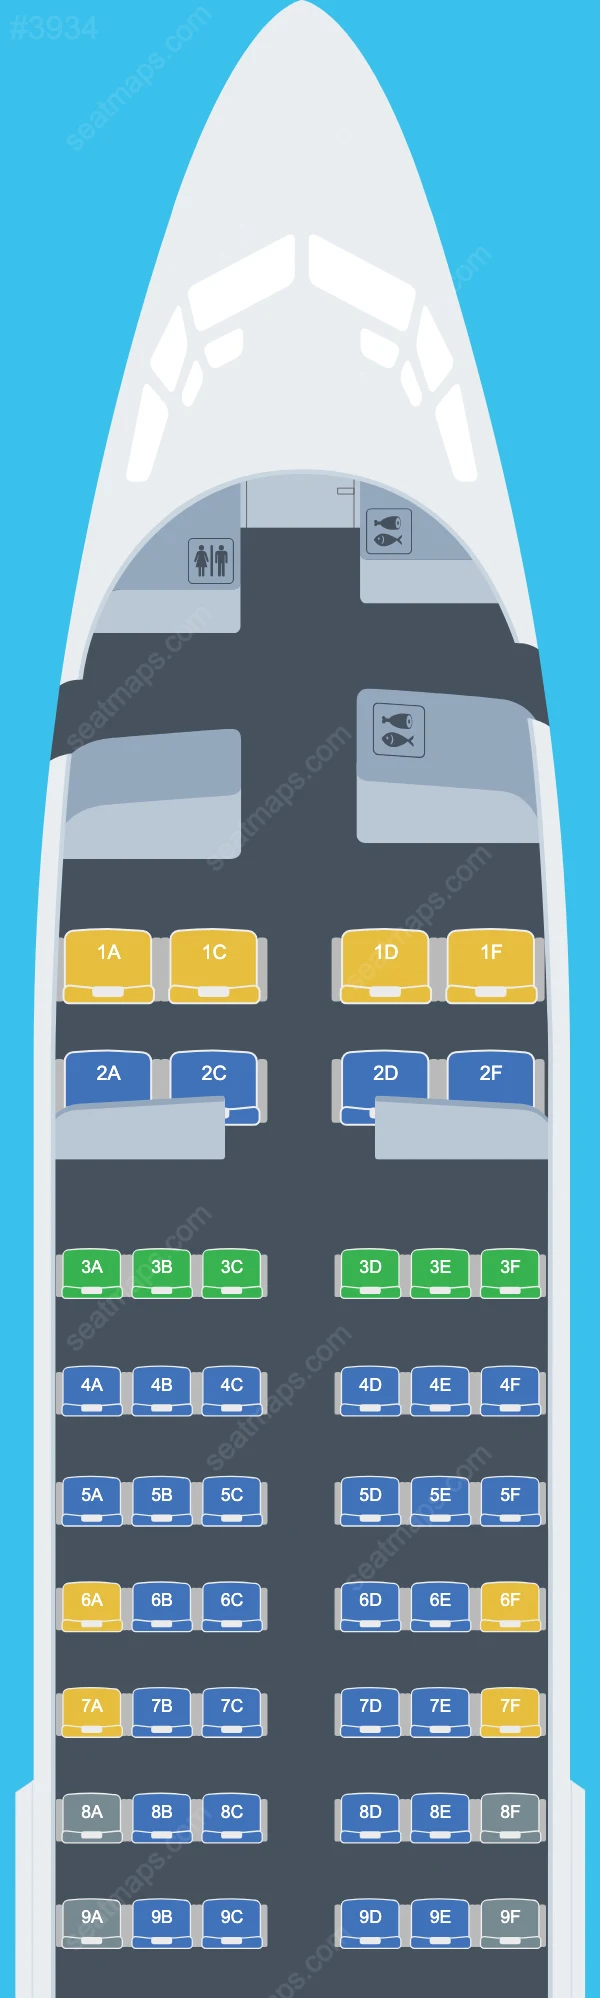 Tarom Boeing 737 Plan de Salle 737-300